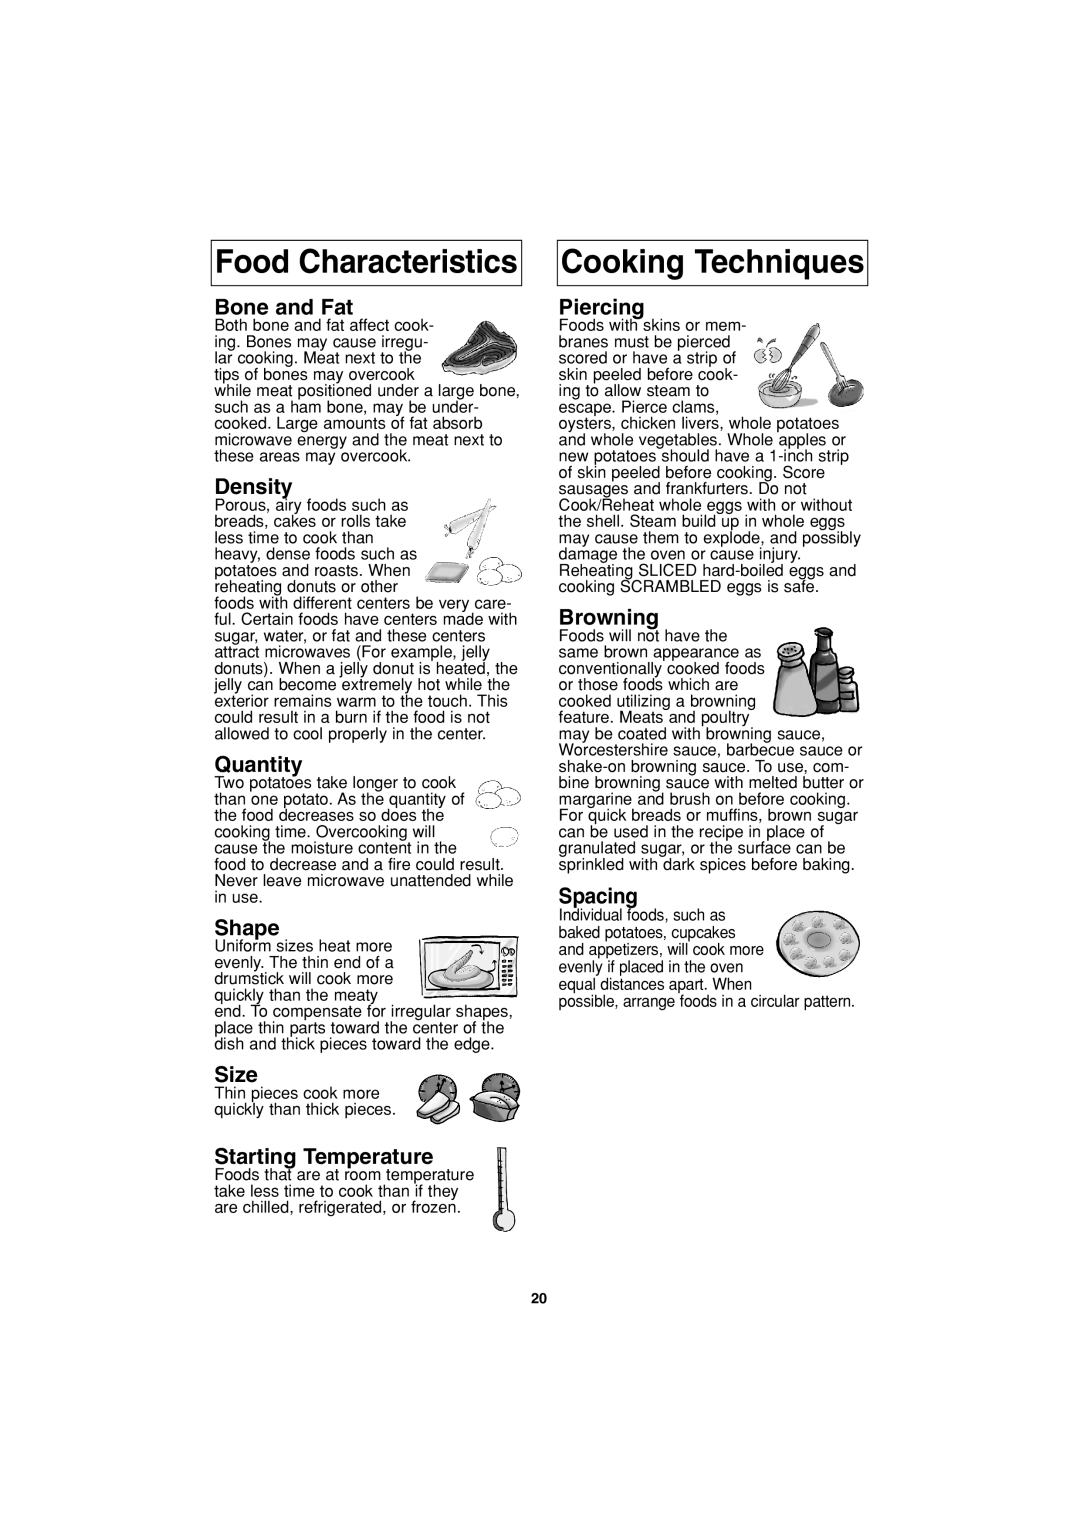 Panasonic NN-S553 Food Characteristics, Cooking Techniques, Bone and Fat, Density, Quantity, Shape, Size, Piercing 